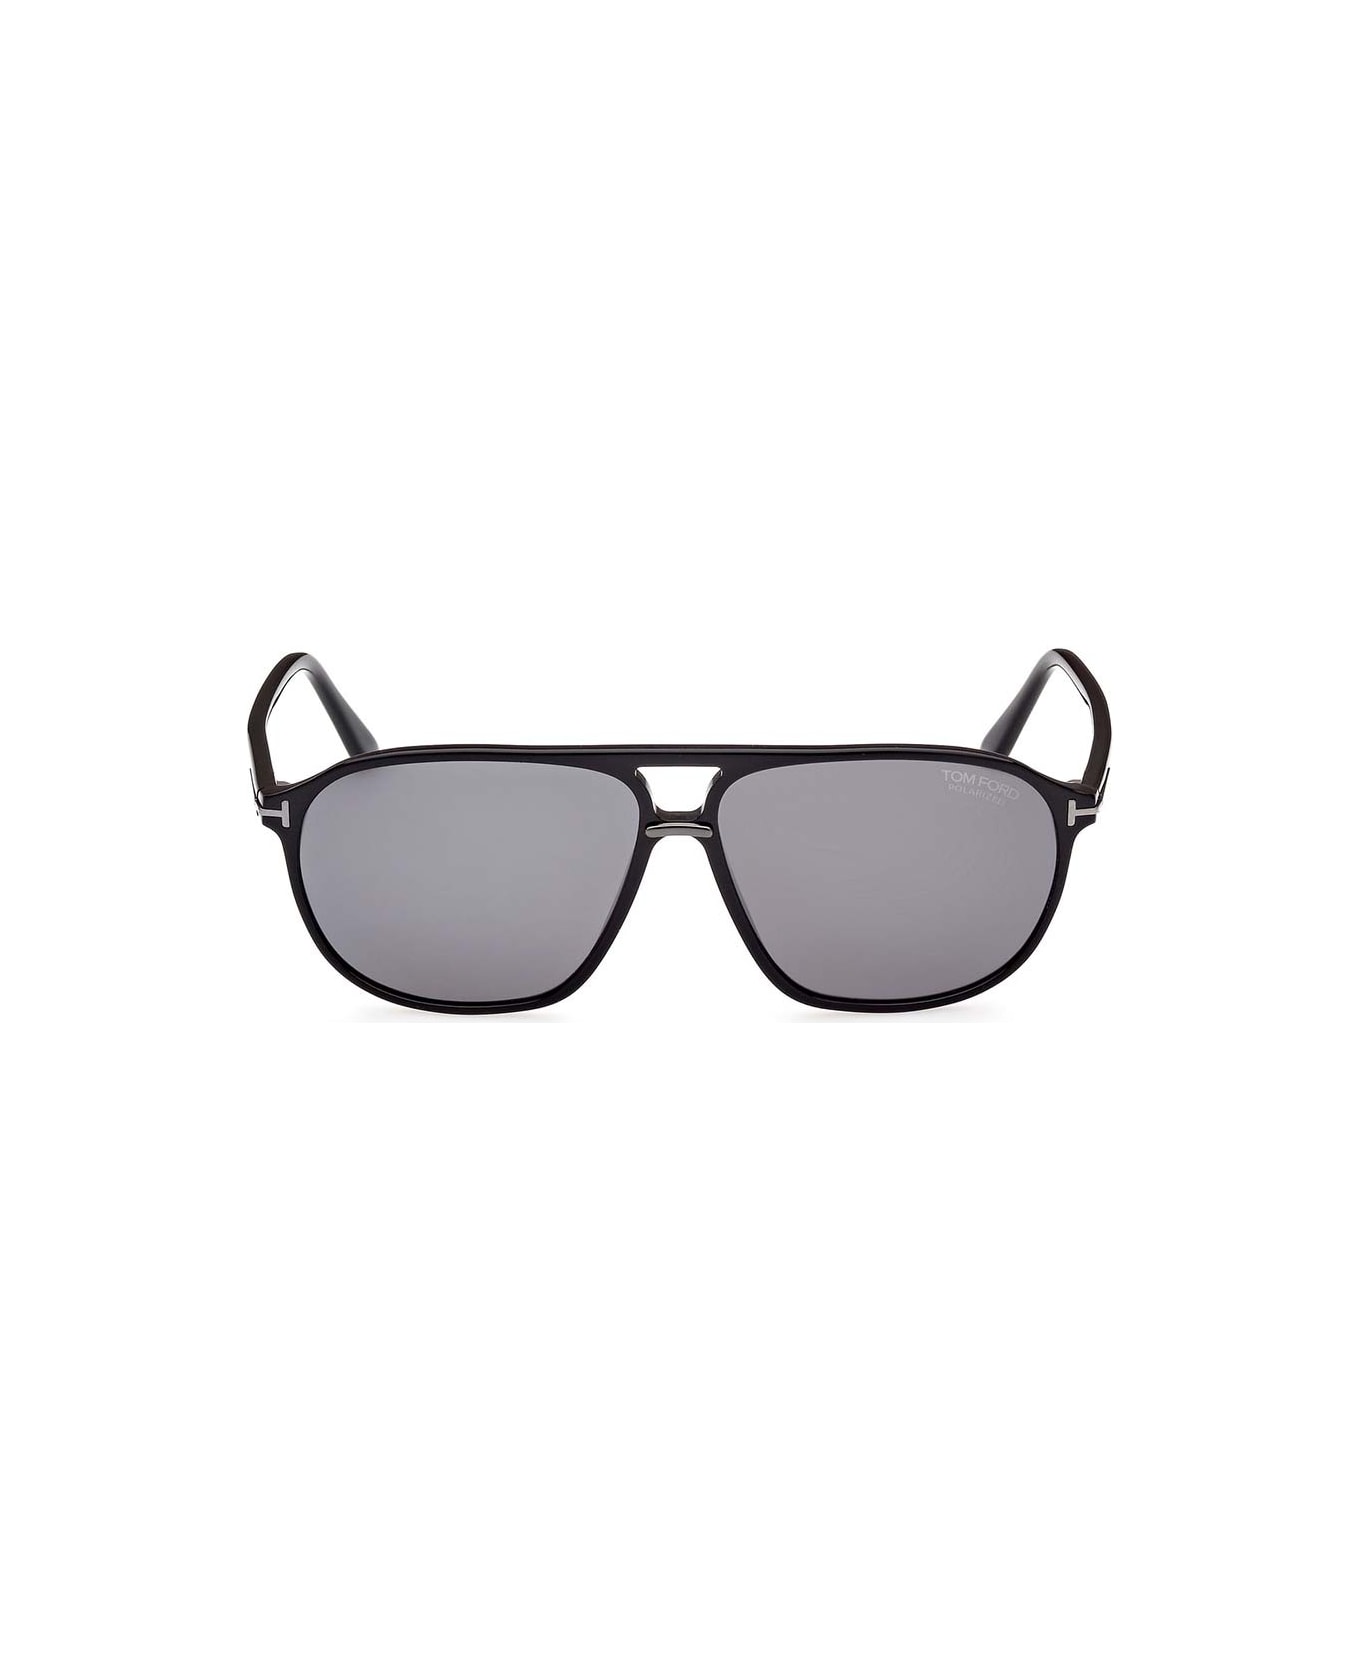 Tom Ford Eyewear Sunglasses - Nero/Grigio